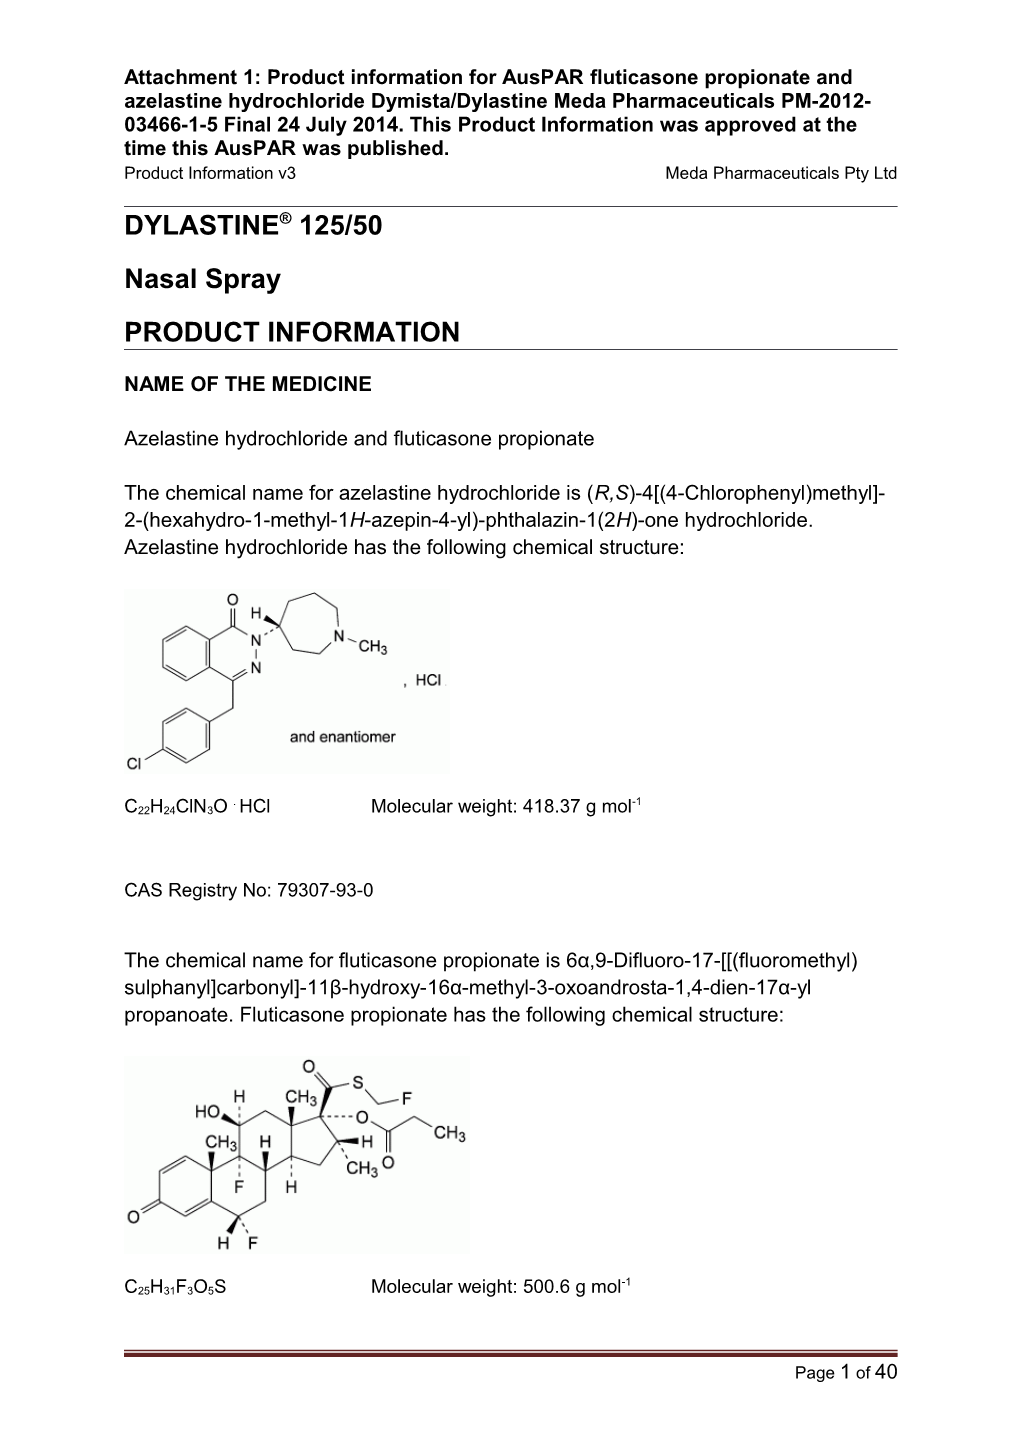 Auspar Attachment 1: Product Information for Fluticasone Propionate and Azelastine Hydrochloride